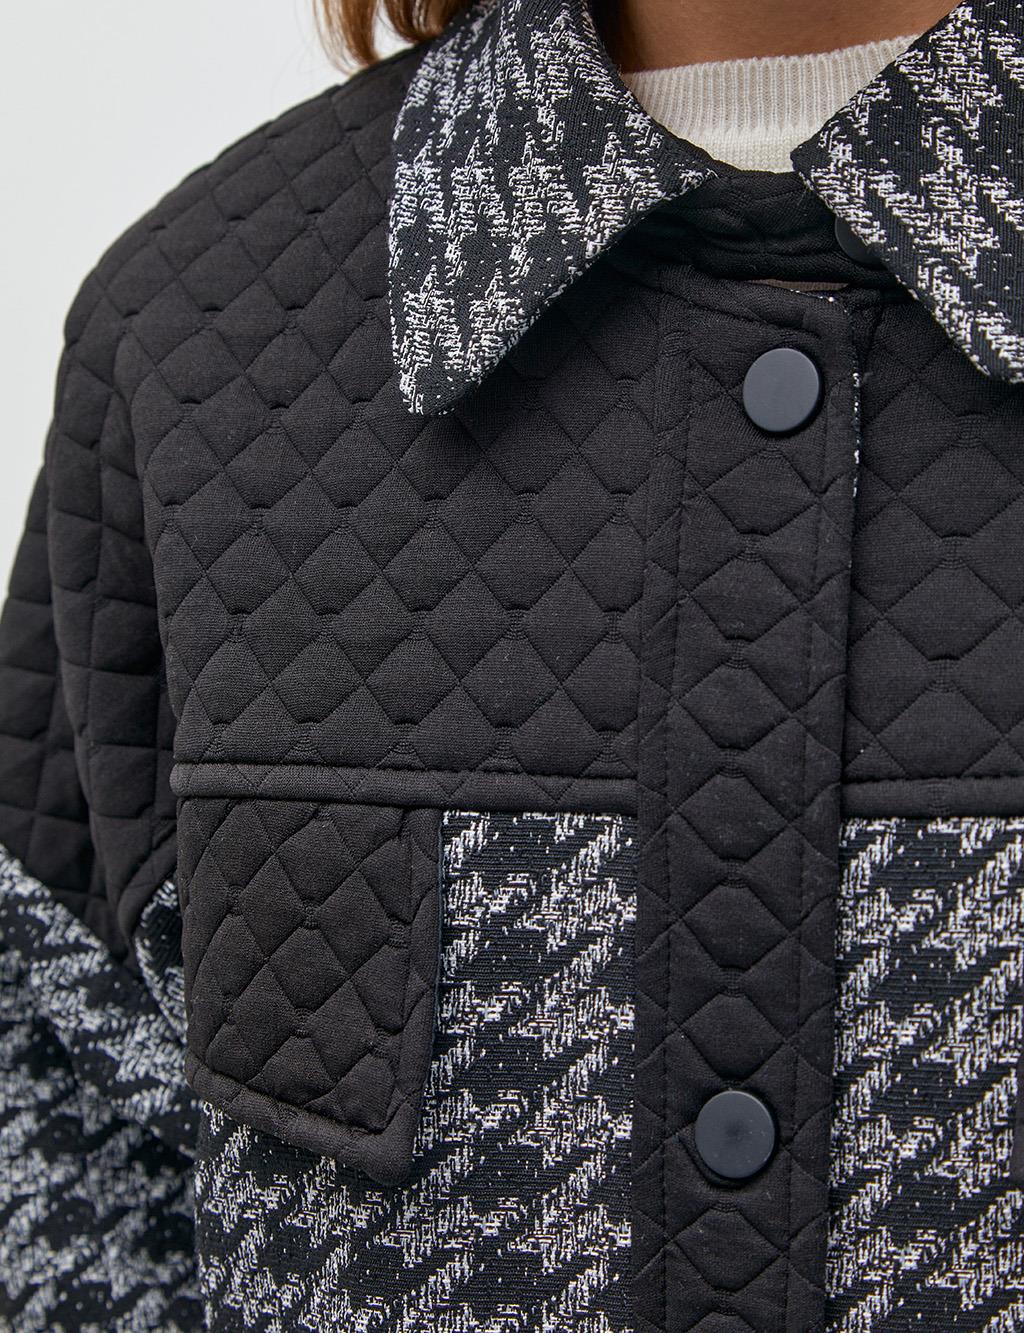 Houndstooth Patterned Tweed Jacket Black